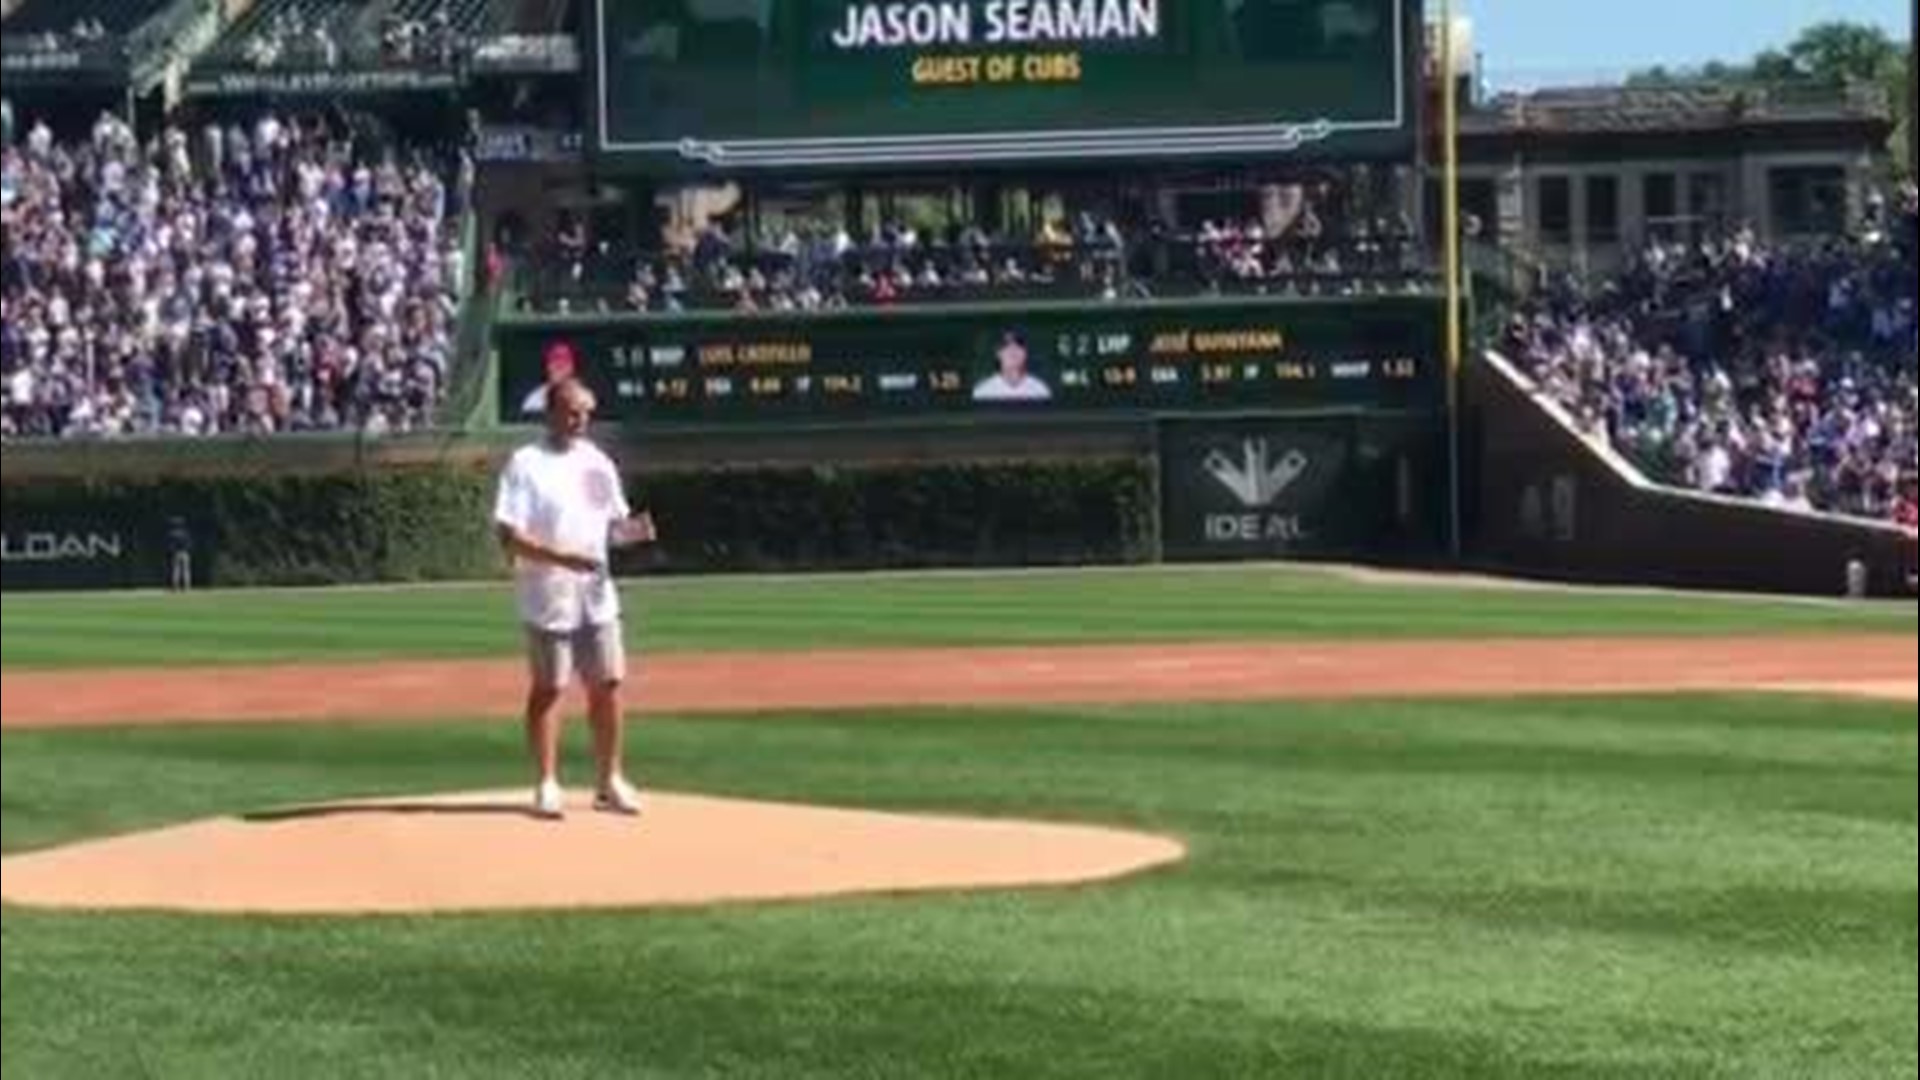 Jason Seaman throws first pitch at Cubs game